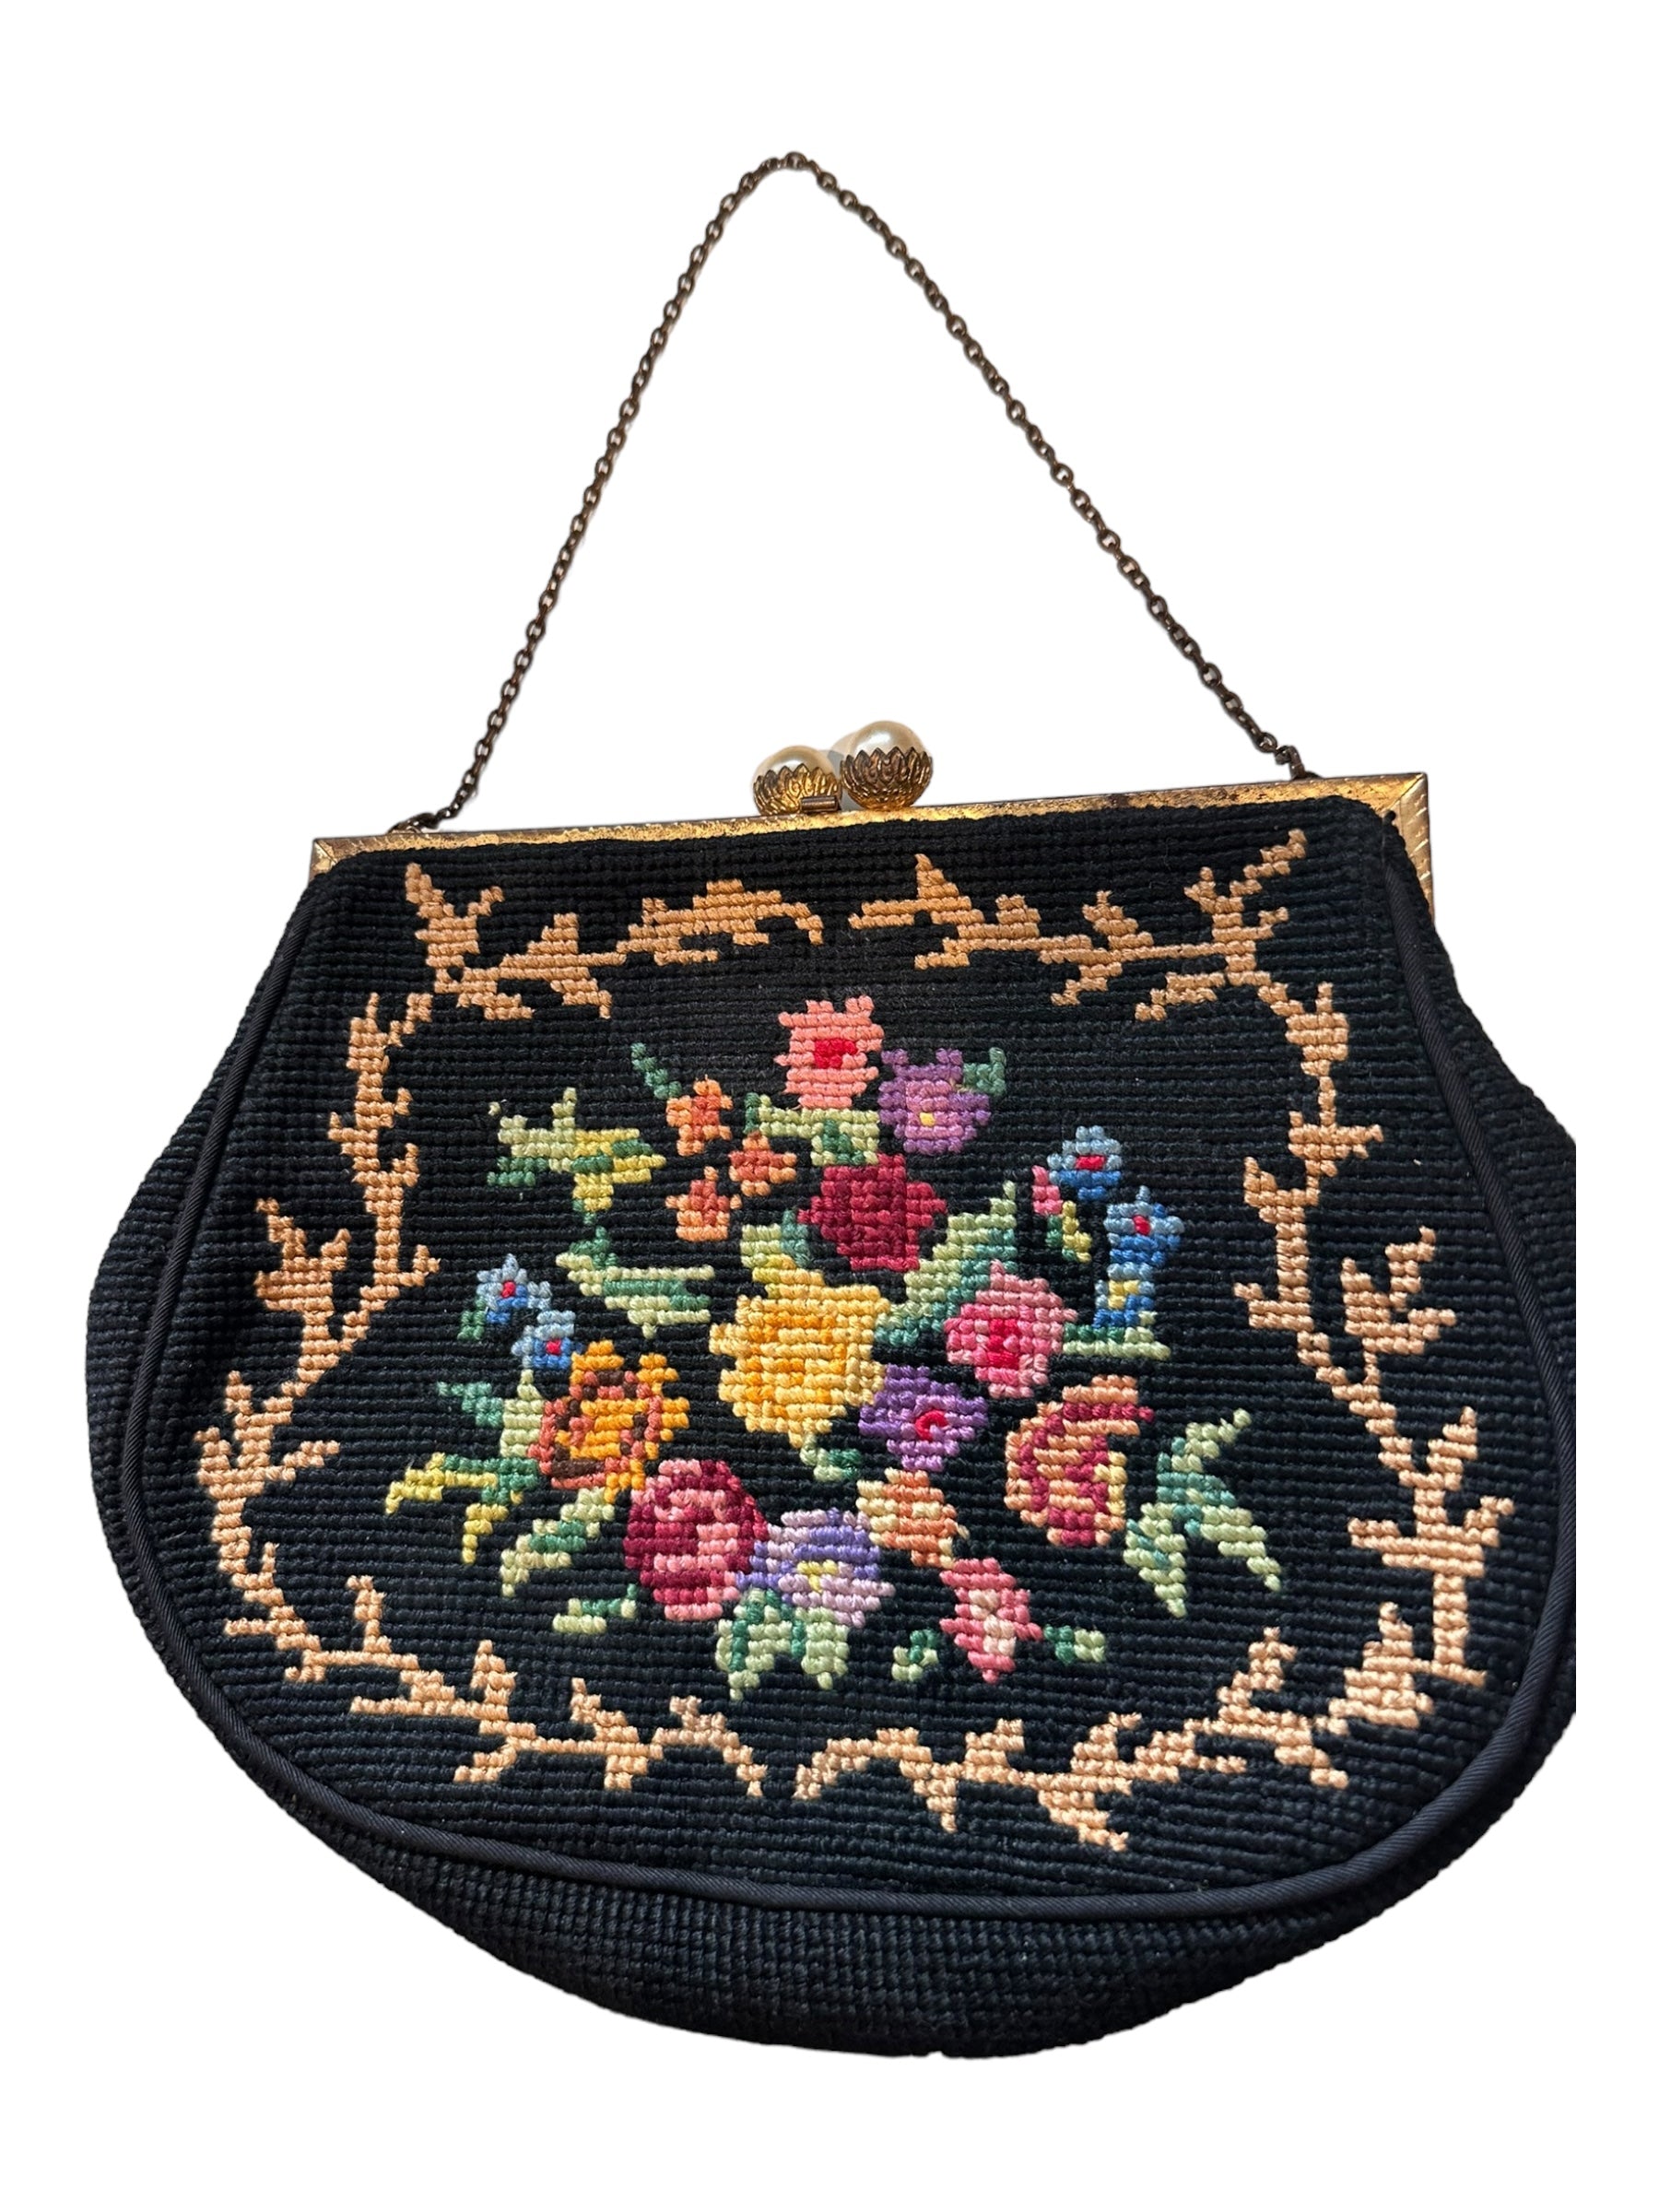 Vintage Art Nouveau Embroidered Bag